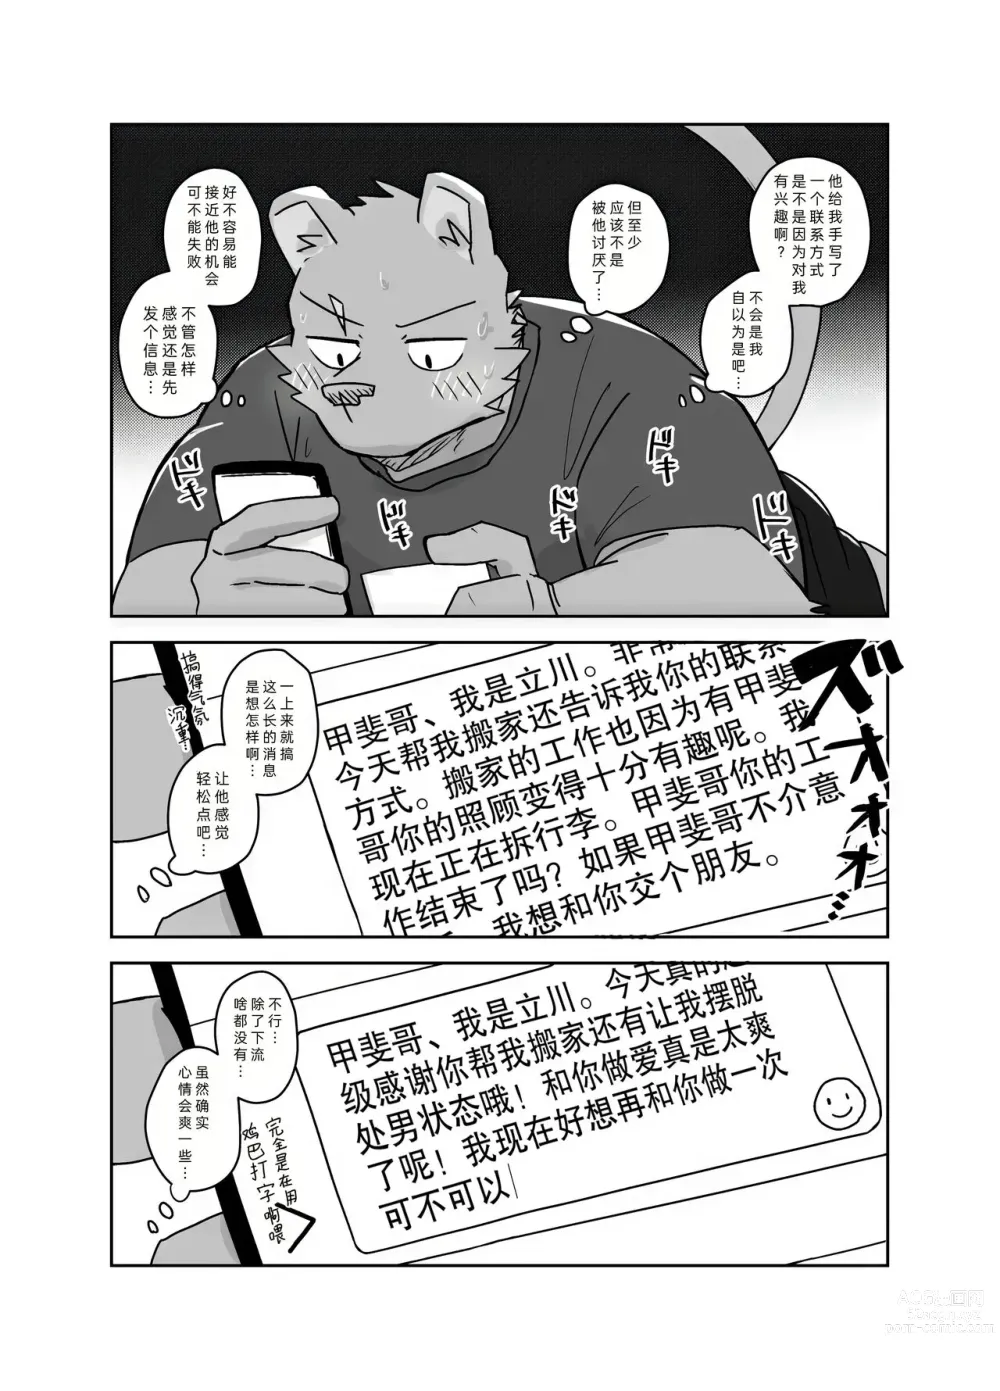 Page 2 of manga 【后续漫画】那一天的夜晚